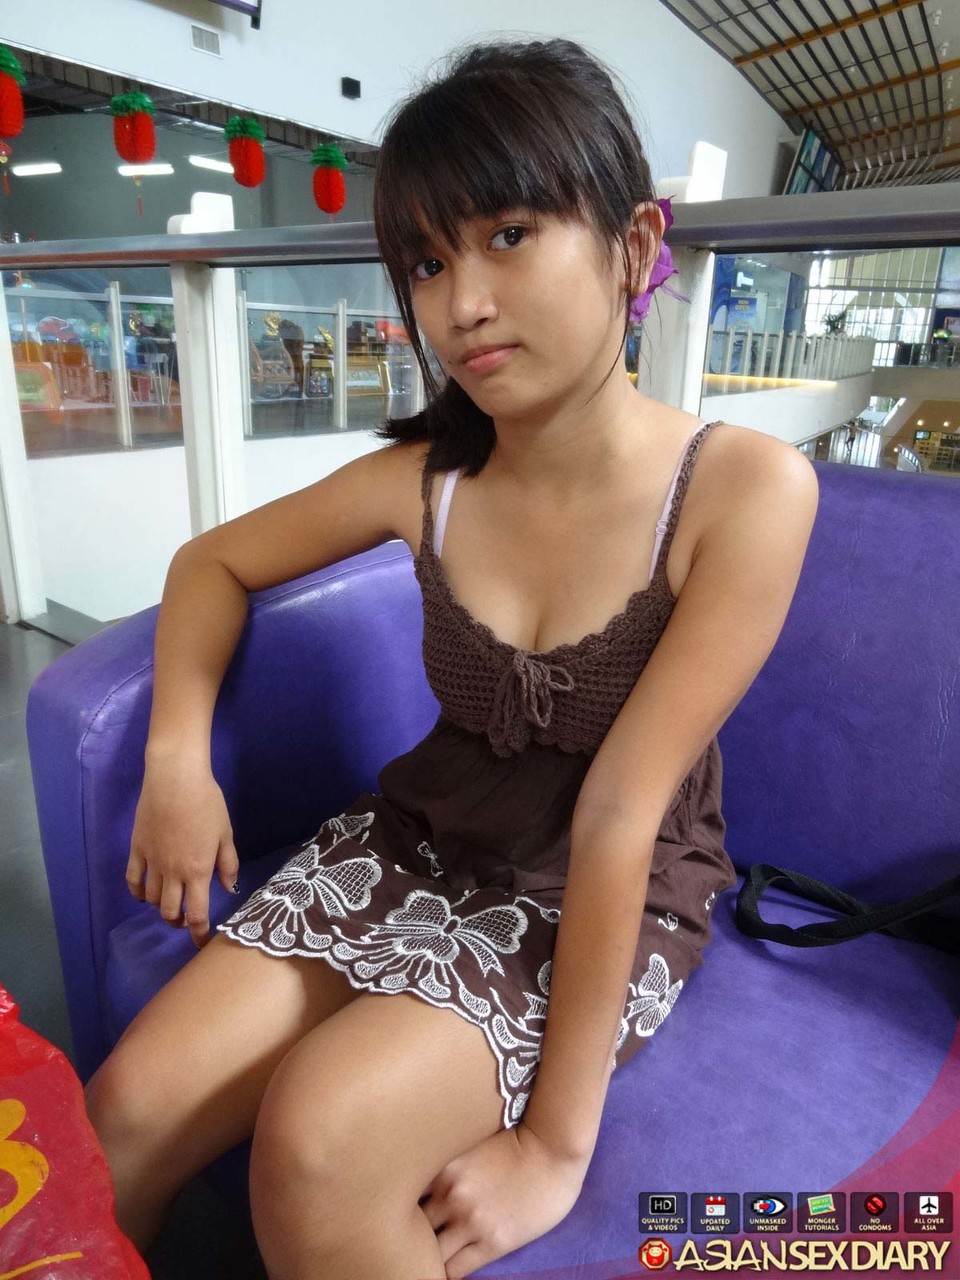 Petite Asian girl Menchie gets naked before having POV sexual relations photo porno #422641351 | Asian Sex Diary Pics, Menchie, Asian, porno mobile